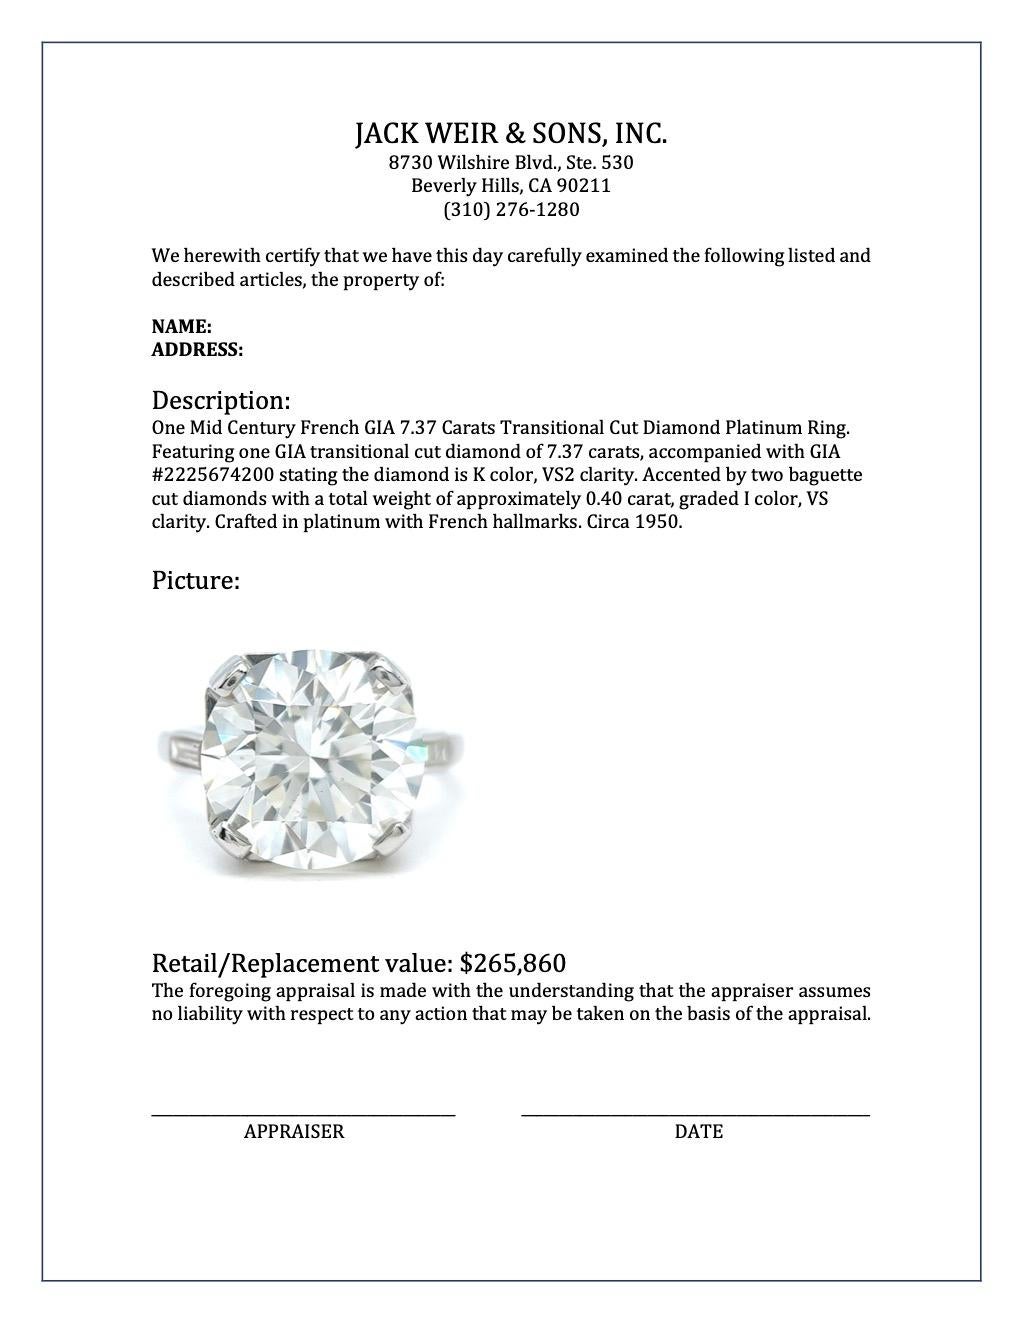 Mid-Century French GIA 7.37 Carats Round Brilliant Cut Diamond Platinum Ring 3